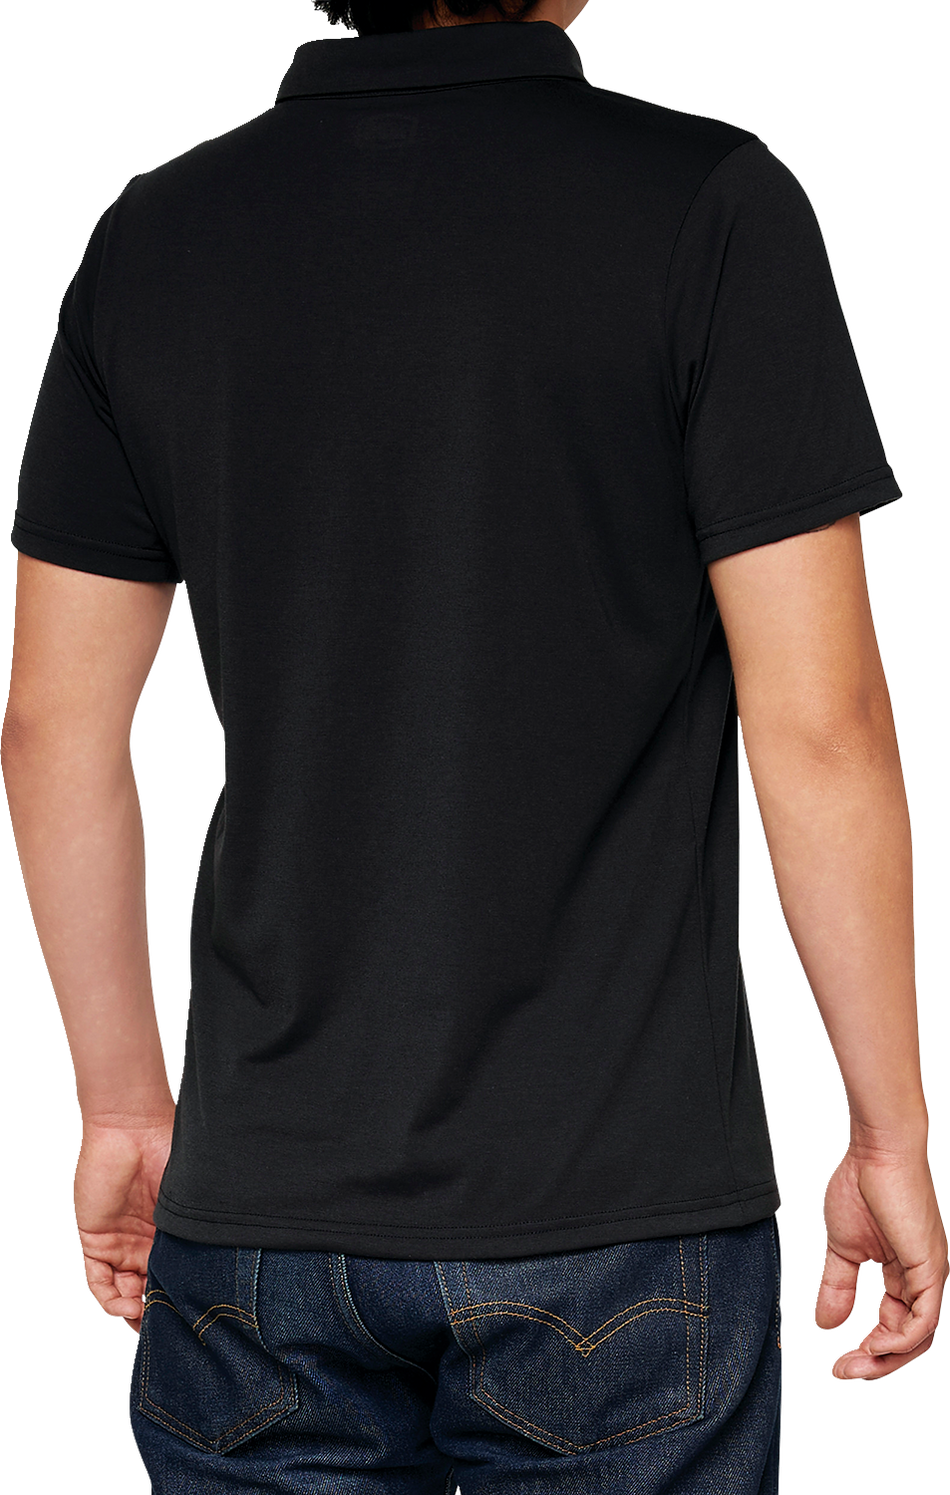 100% Corpo Polo Shirt - Black/Gray - Small 35019-057-10